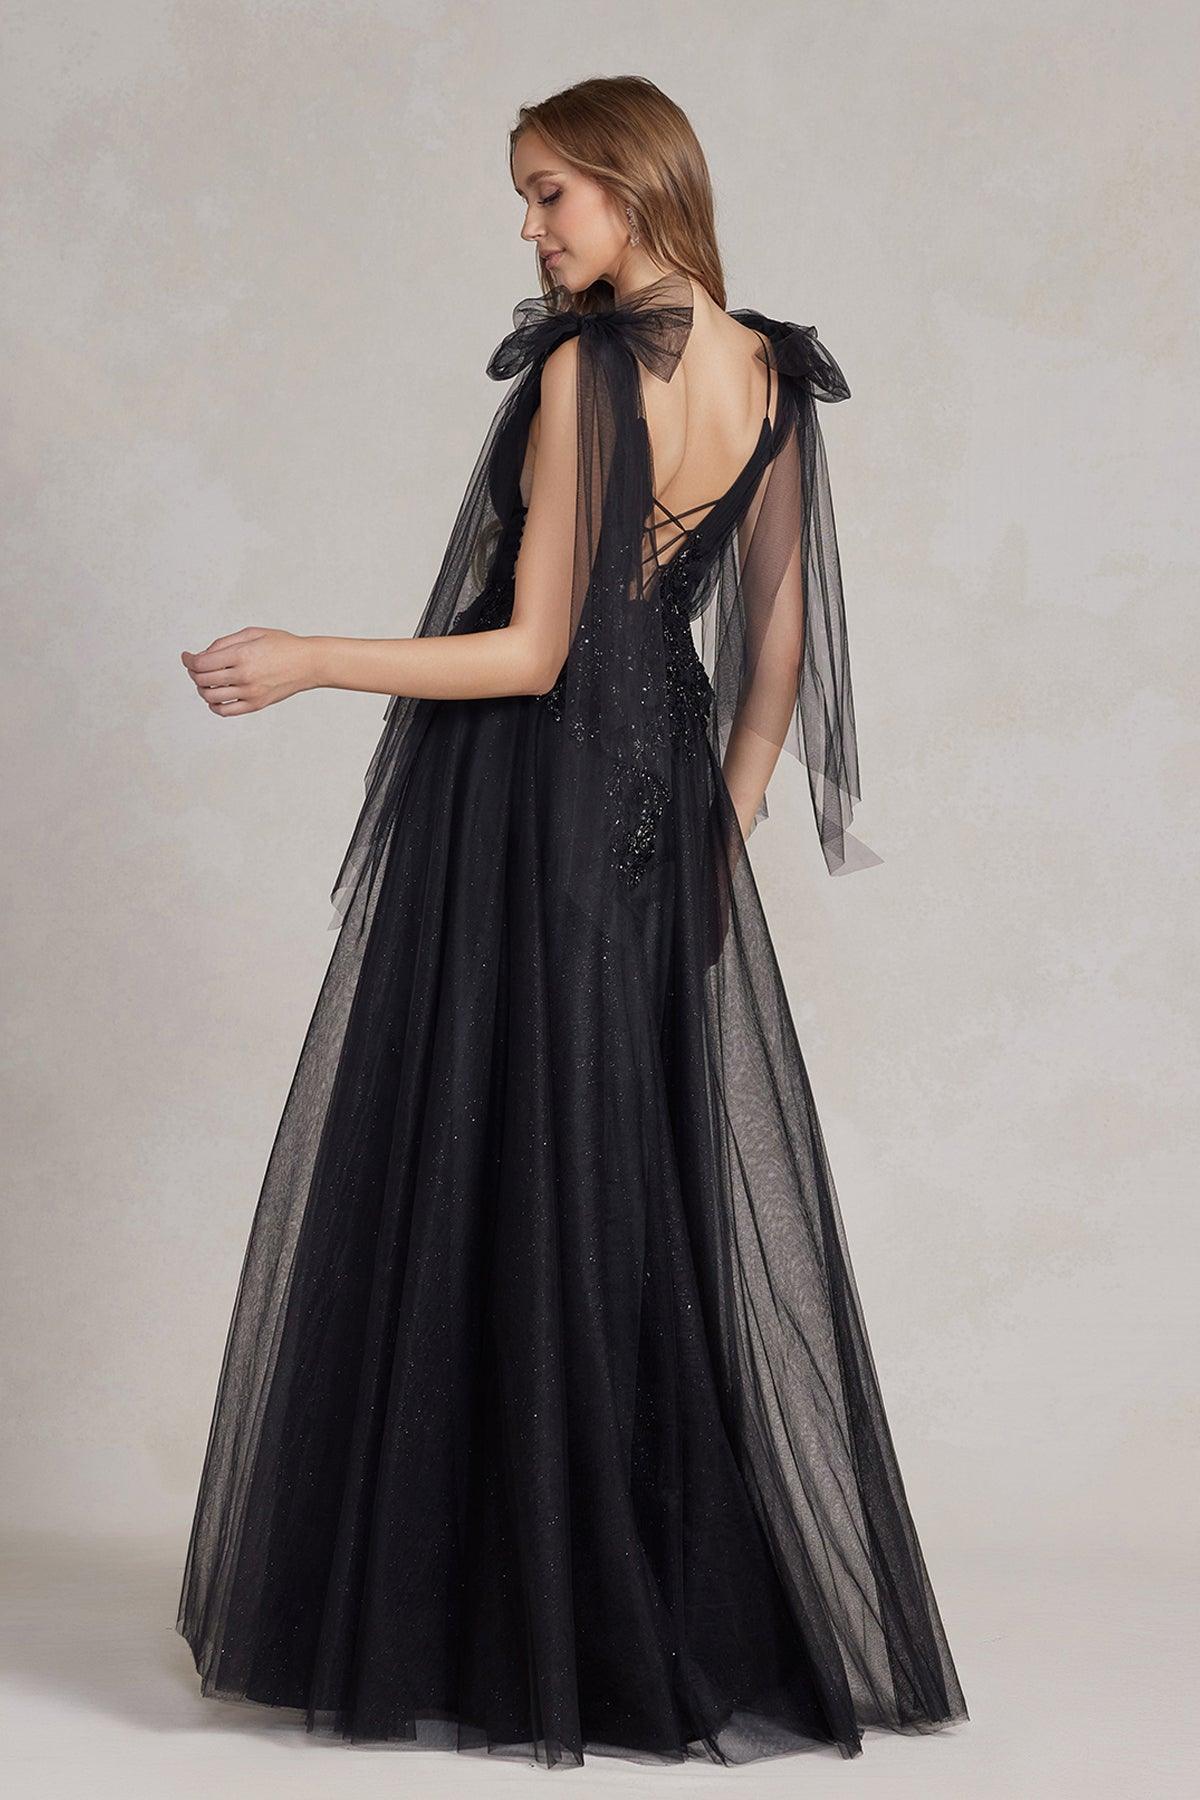 Nox Anabel E1075 Long Formal Prom Dress Black